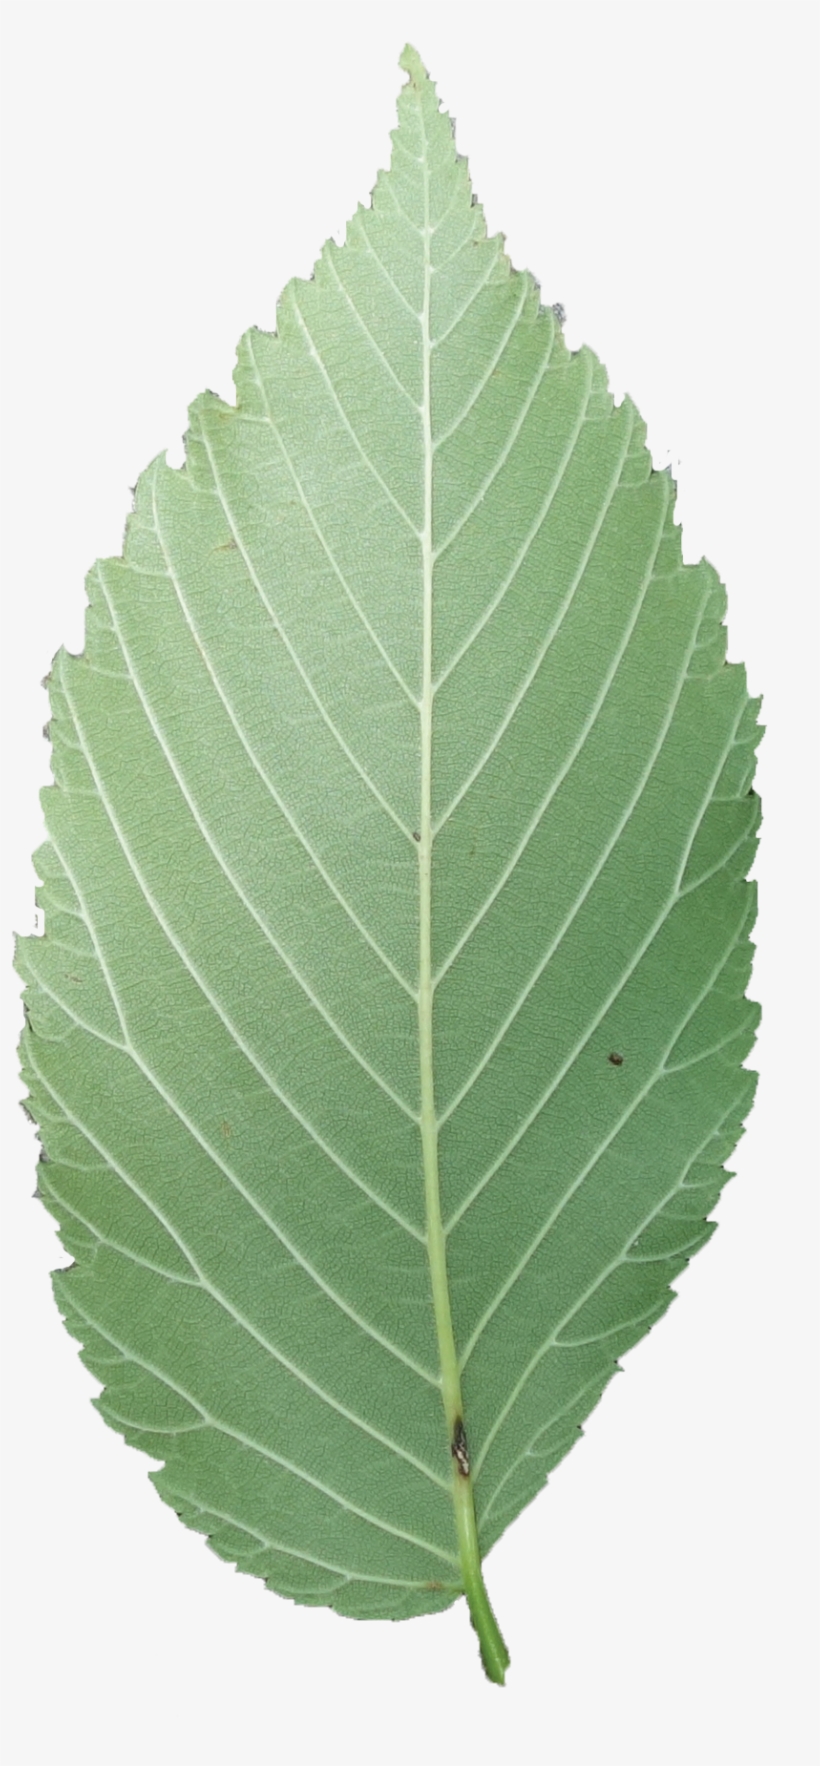 Simple - Elm Tree Leaves Png, transparent png #3795806